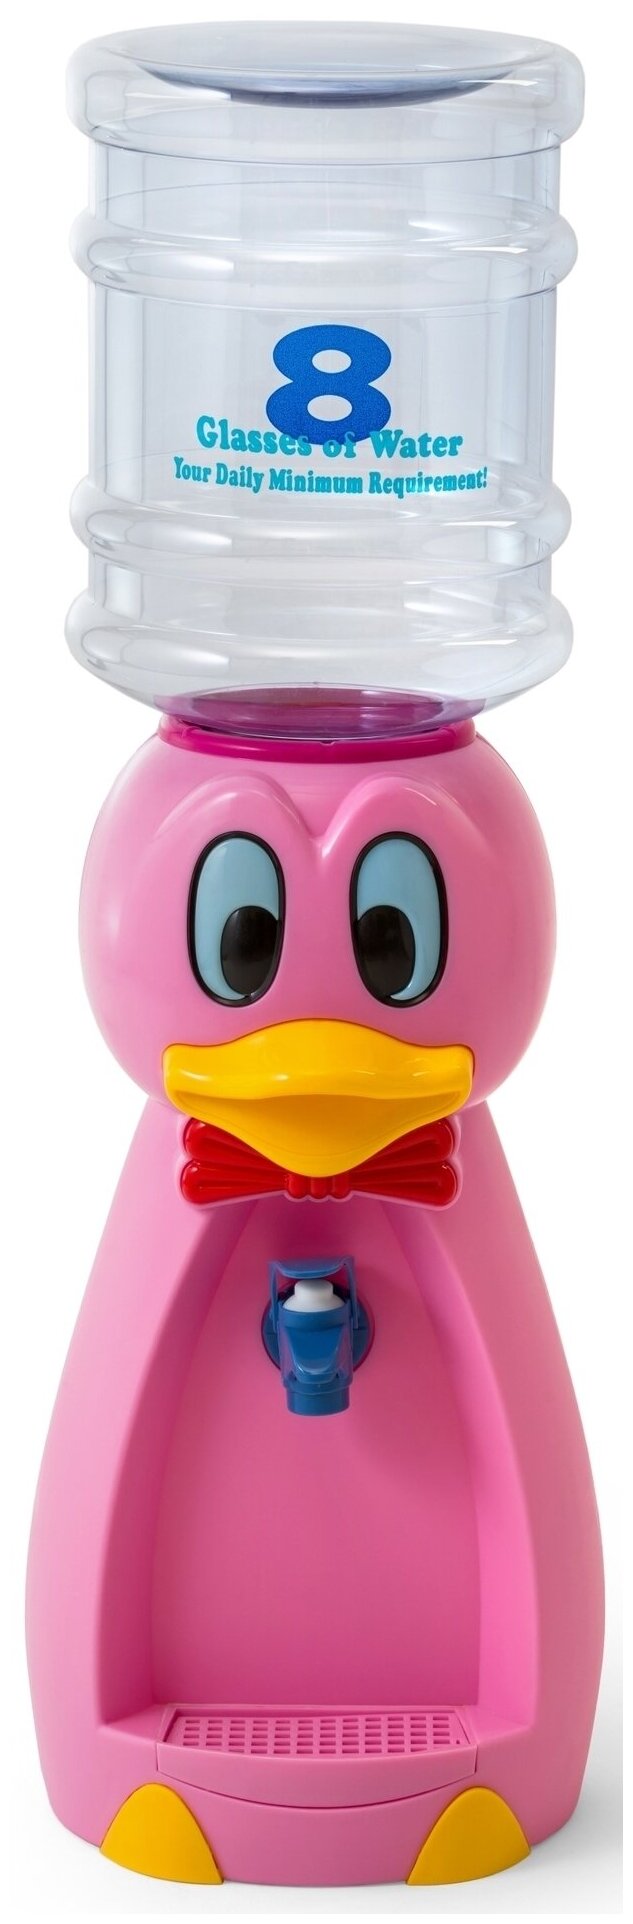 Vatten Kids Duck детский кулер для воды (без стаканчика) - фотография № 4